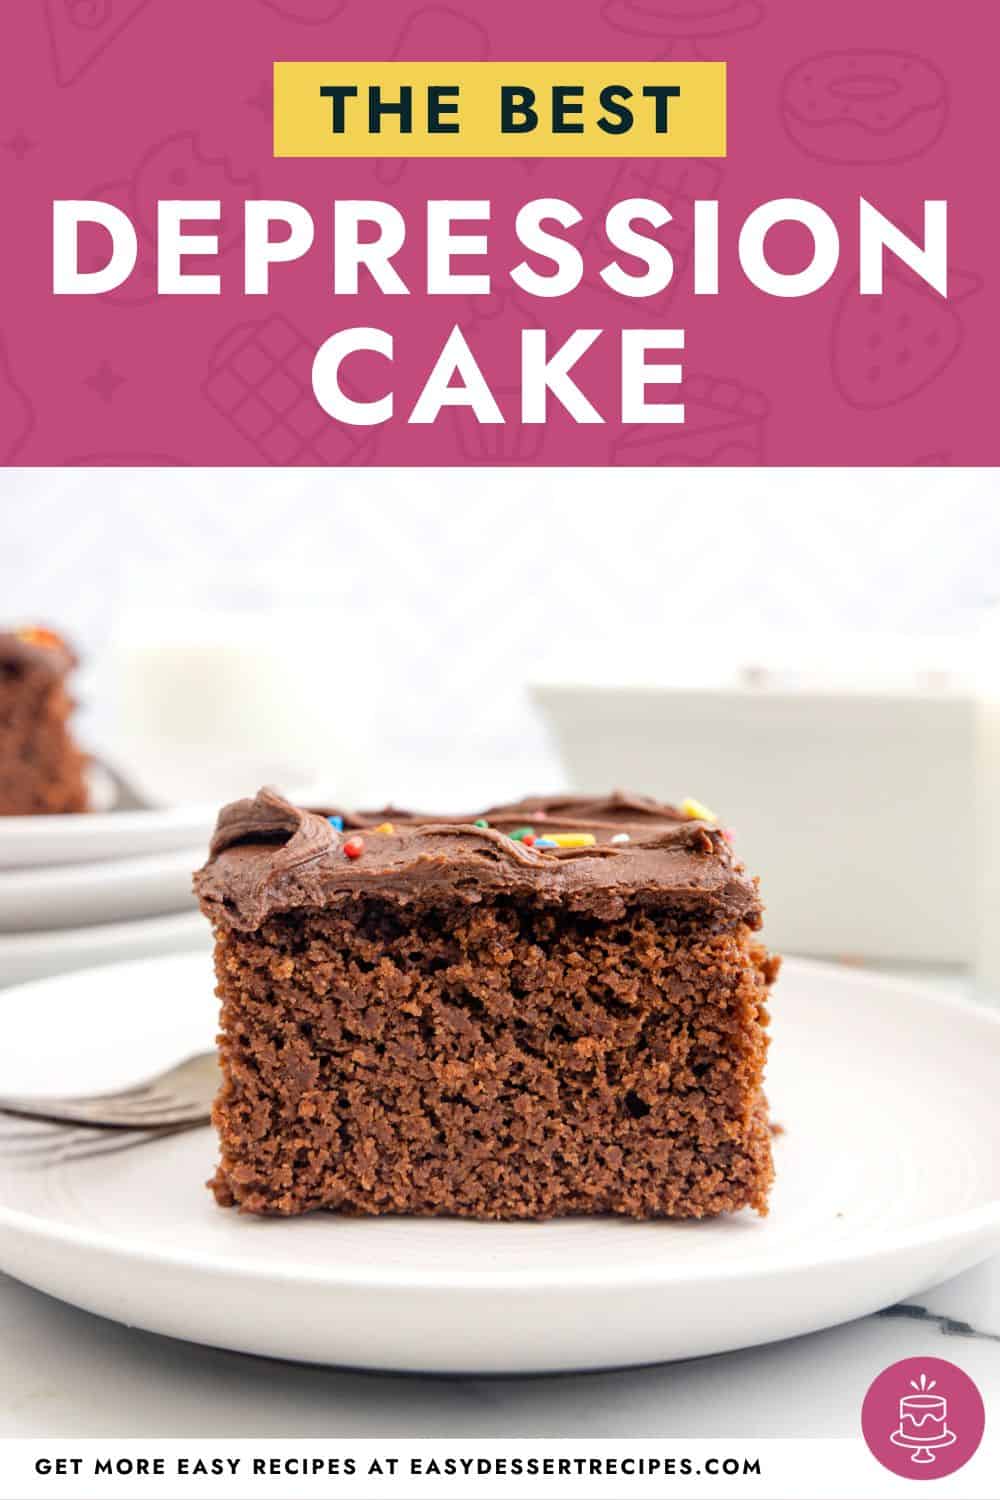 The best depression cake.